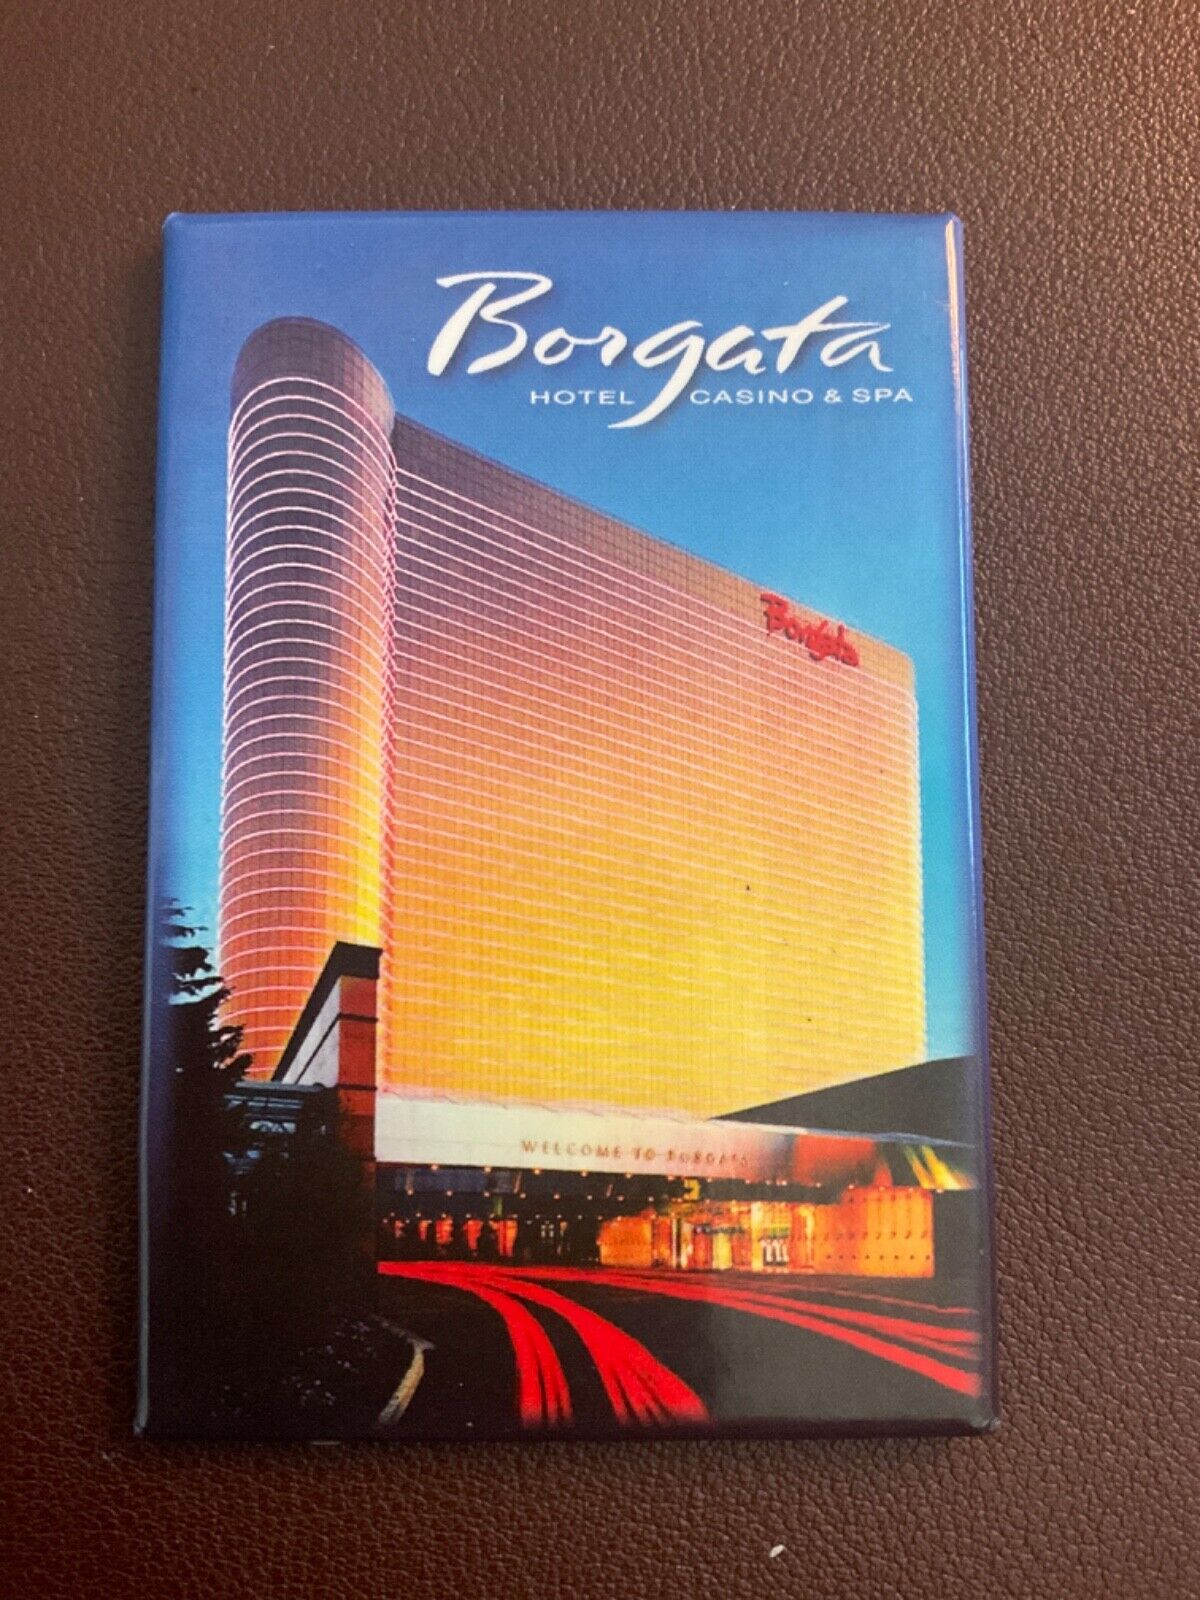 Borgata Hotel & Casino - Atlantic City NJ -  Vintage Refrigerator Magnet